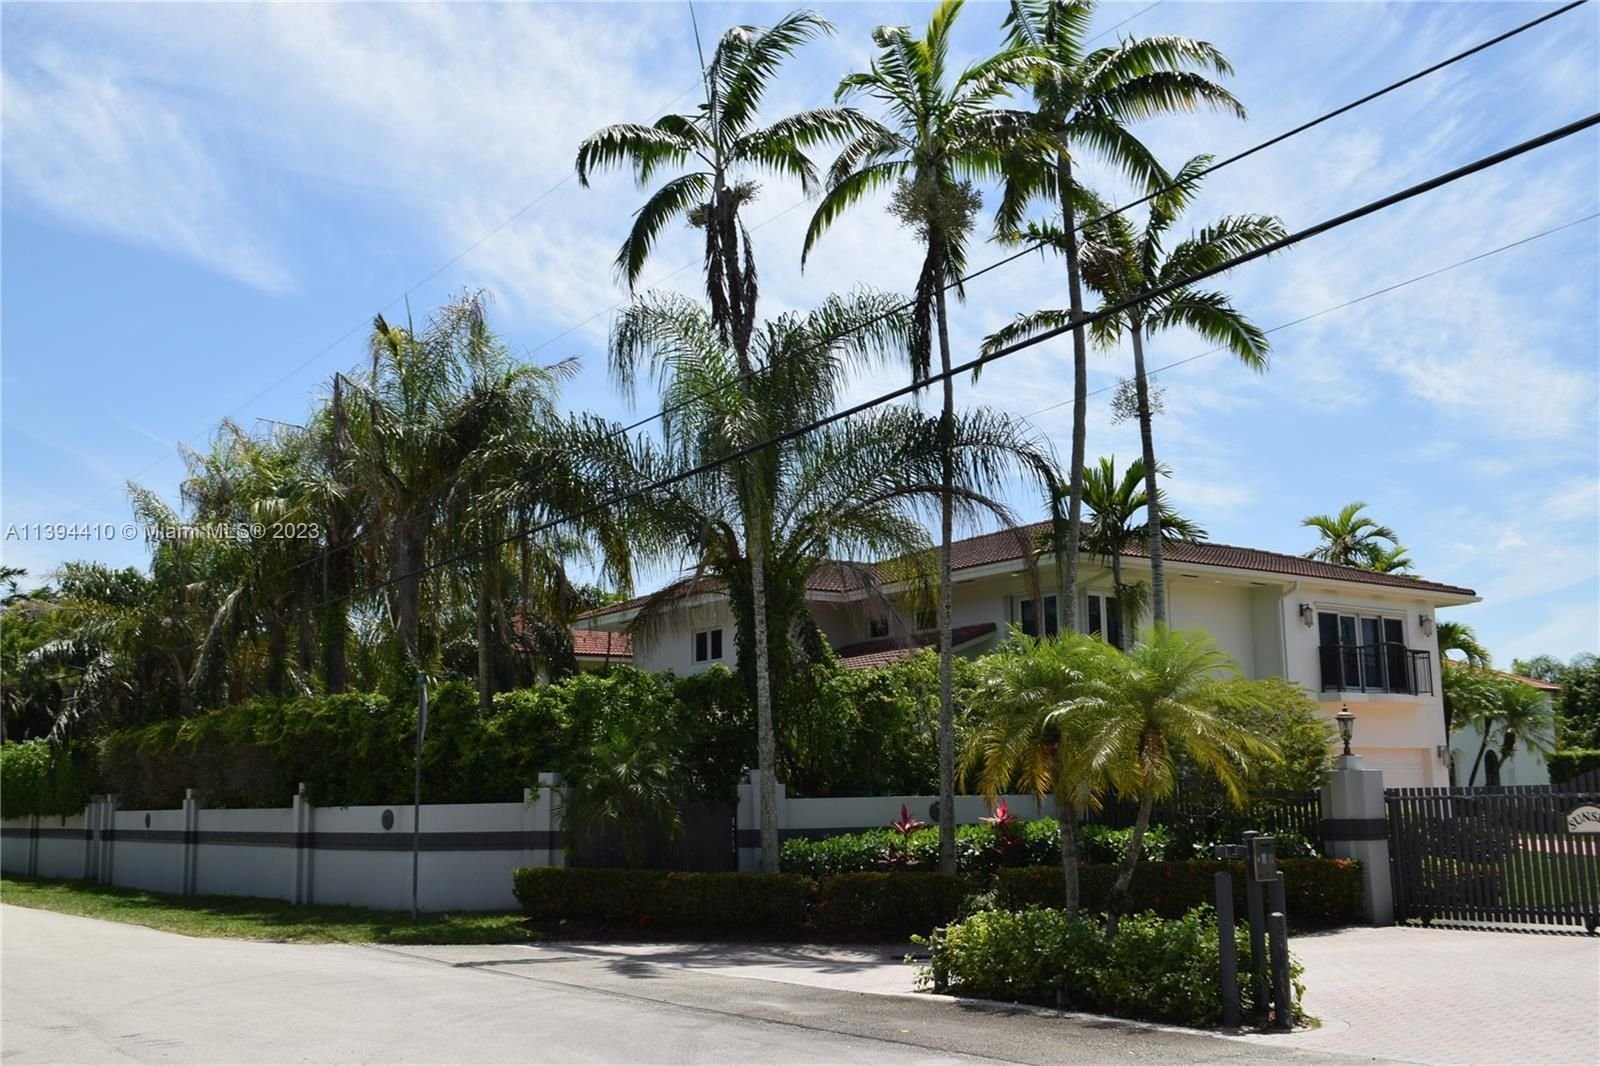 Real estate property located at 7115 69th Ct, Miami-Dade County, Miami, FL